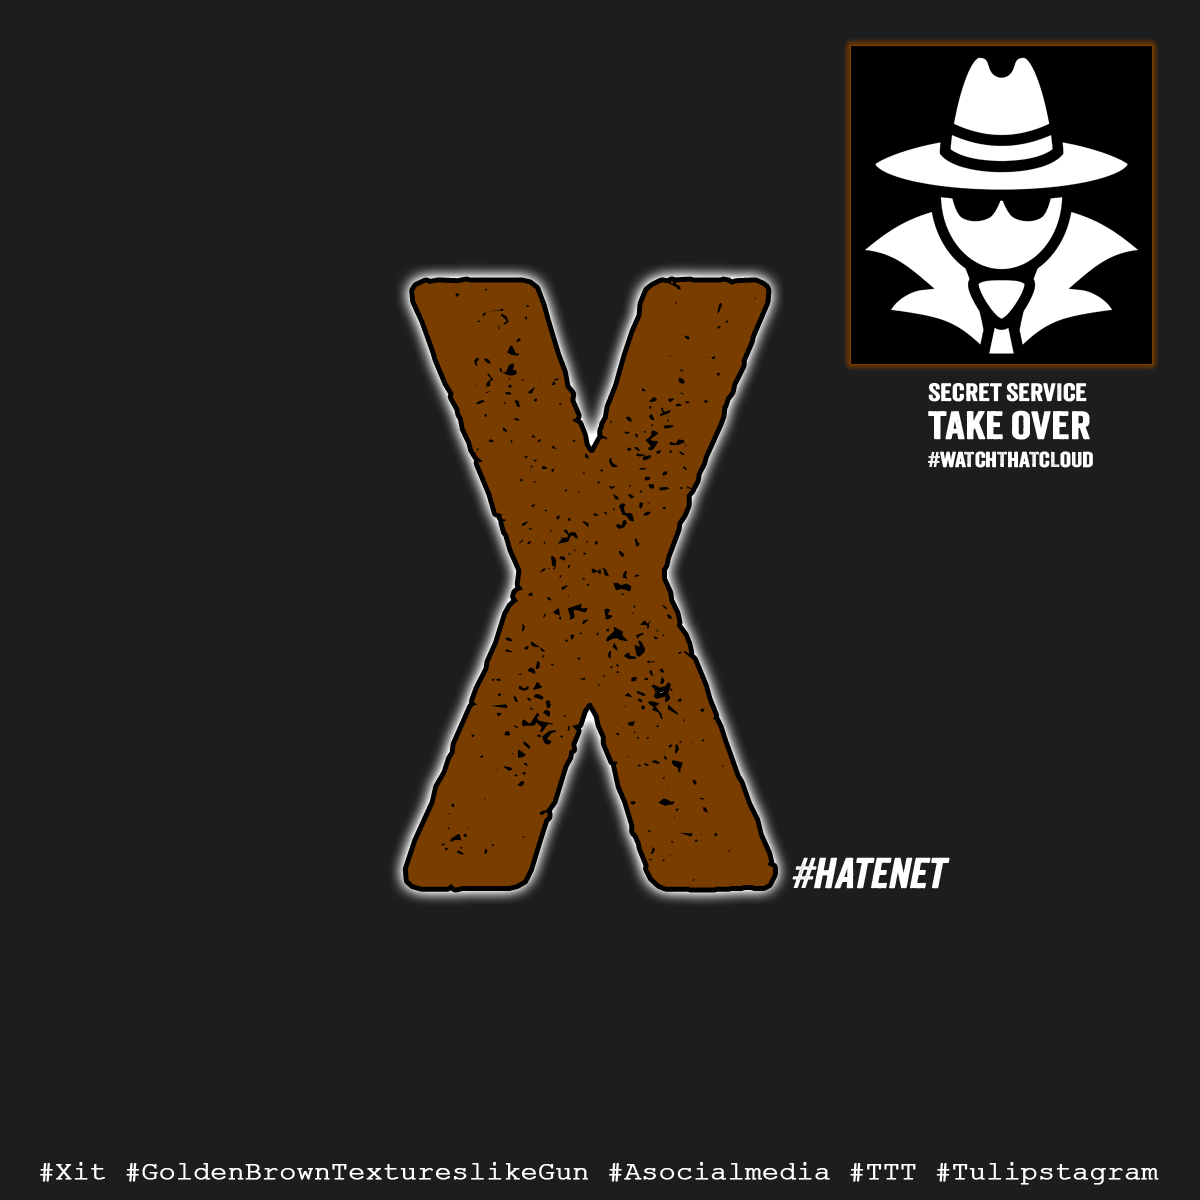 "X" - Secret Service: Take Over #watchthatcloud #hateNet #Xit #GoldenBrownTextureslikeGun #Asocialmedia #TTT #Tulipstagram